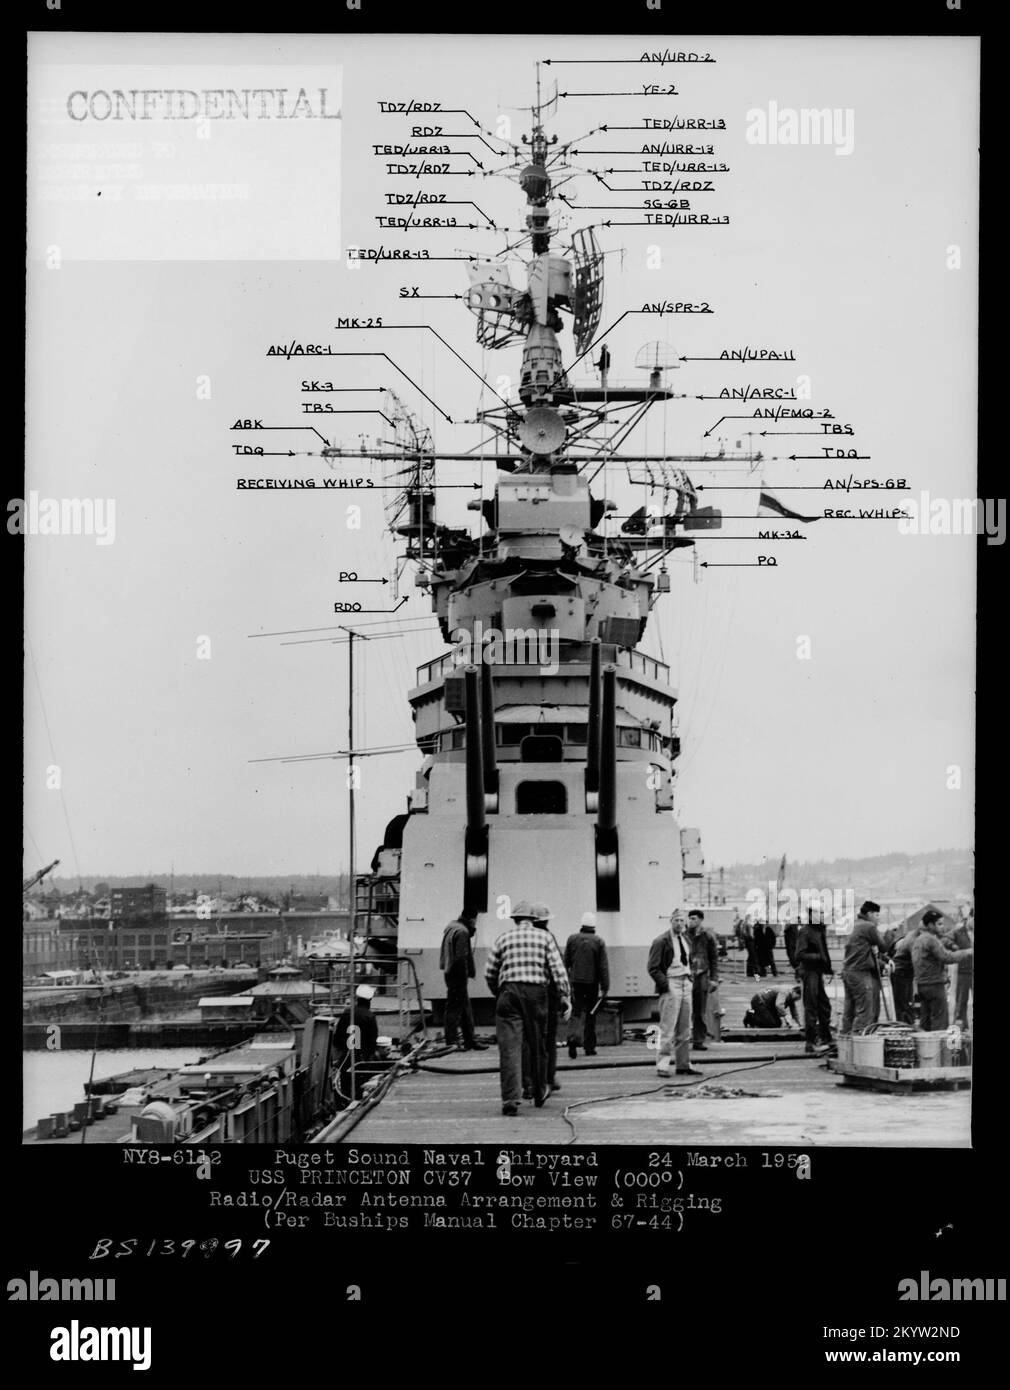 CV 37 Princeton , navi, Navali, Barche, Storia Navale, Navy Foto stock -  Alamy